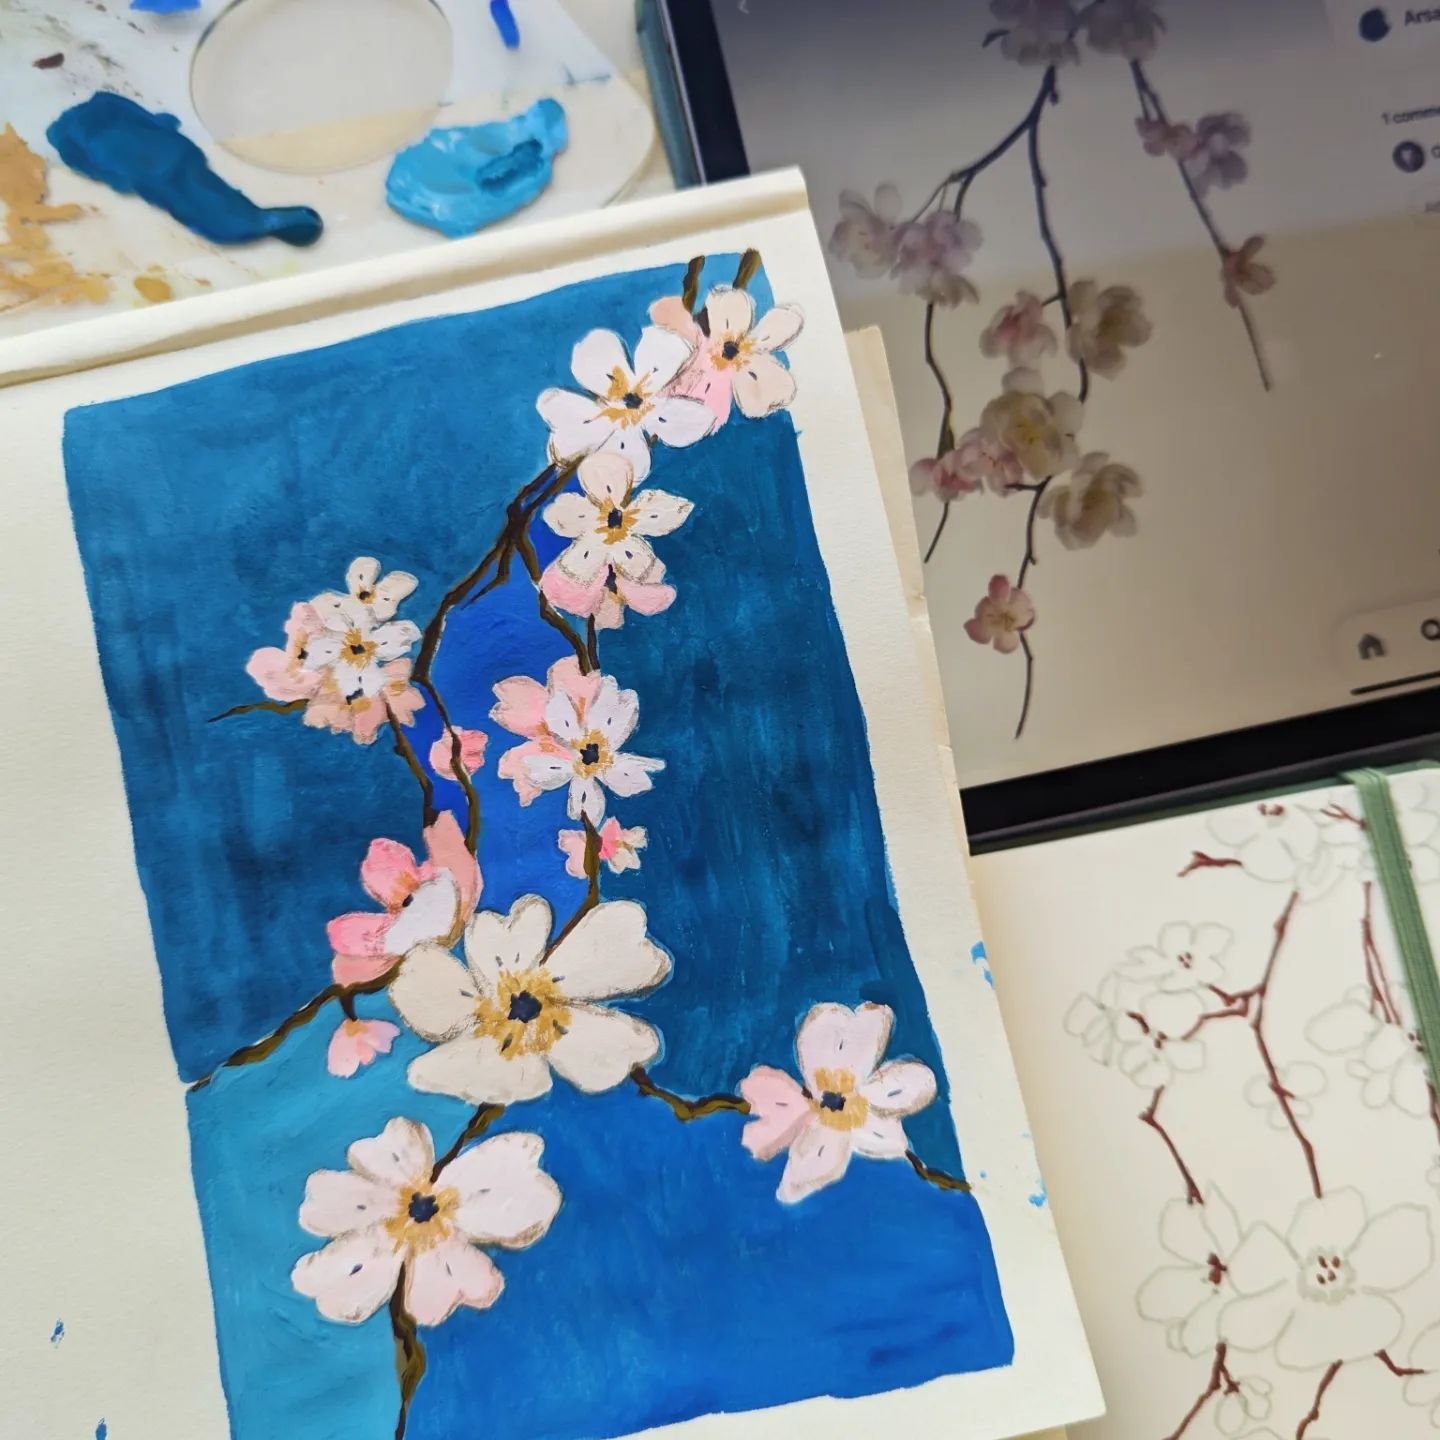 Cherry blossom studies for the weekend 🌸💮
.
.
#artistsketchbook #flowerssketch #artstudy